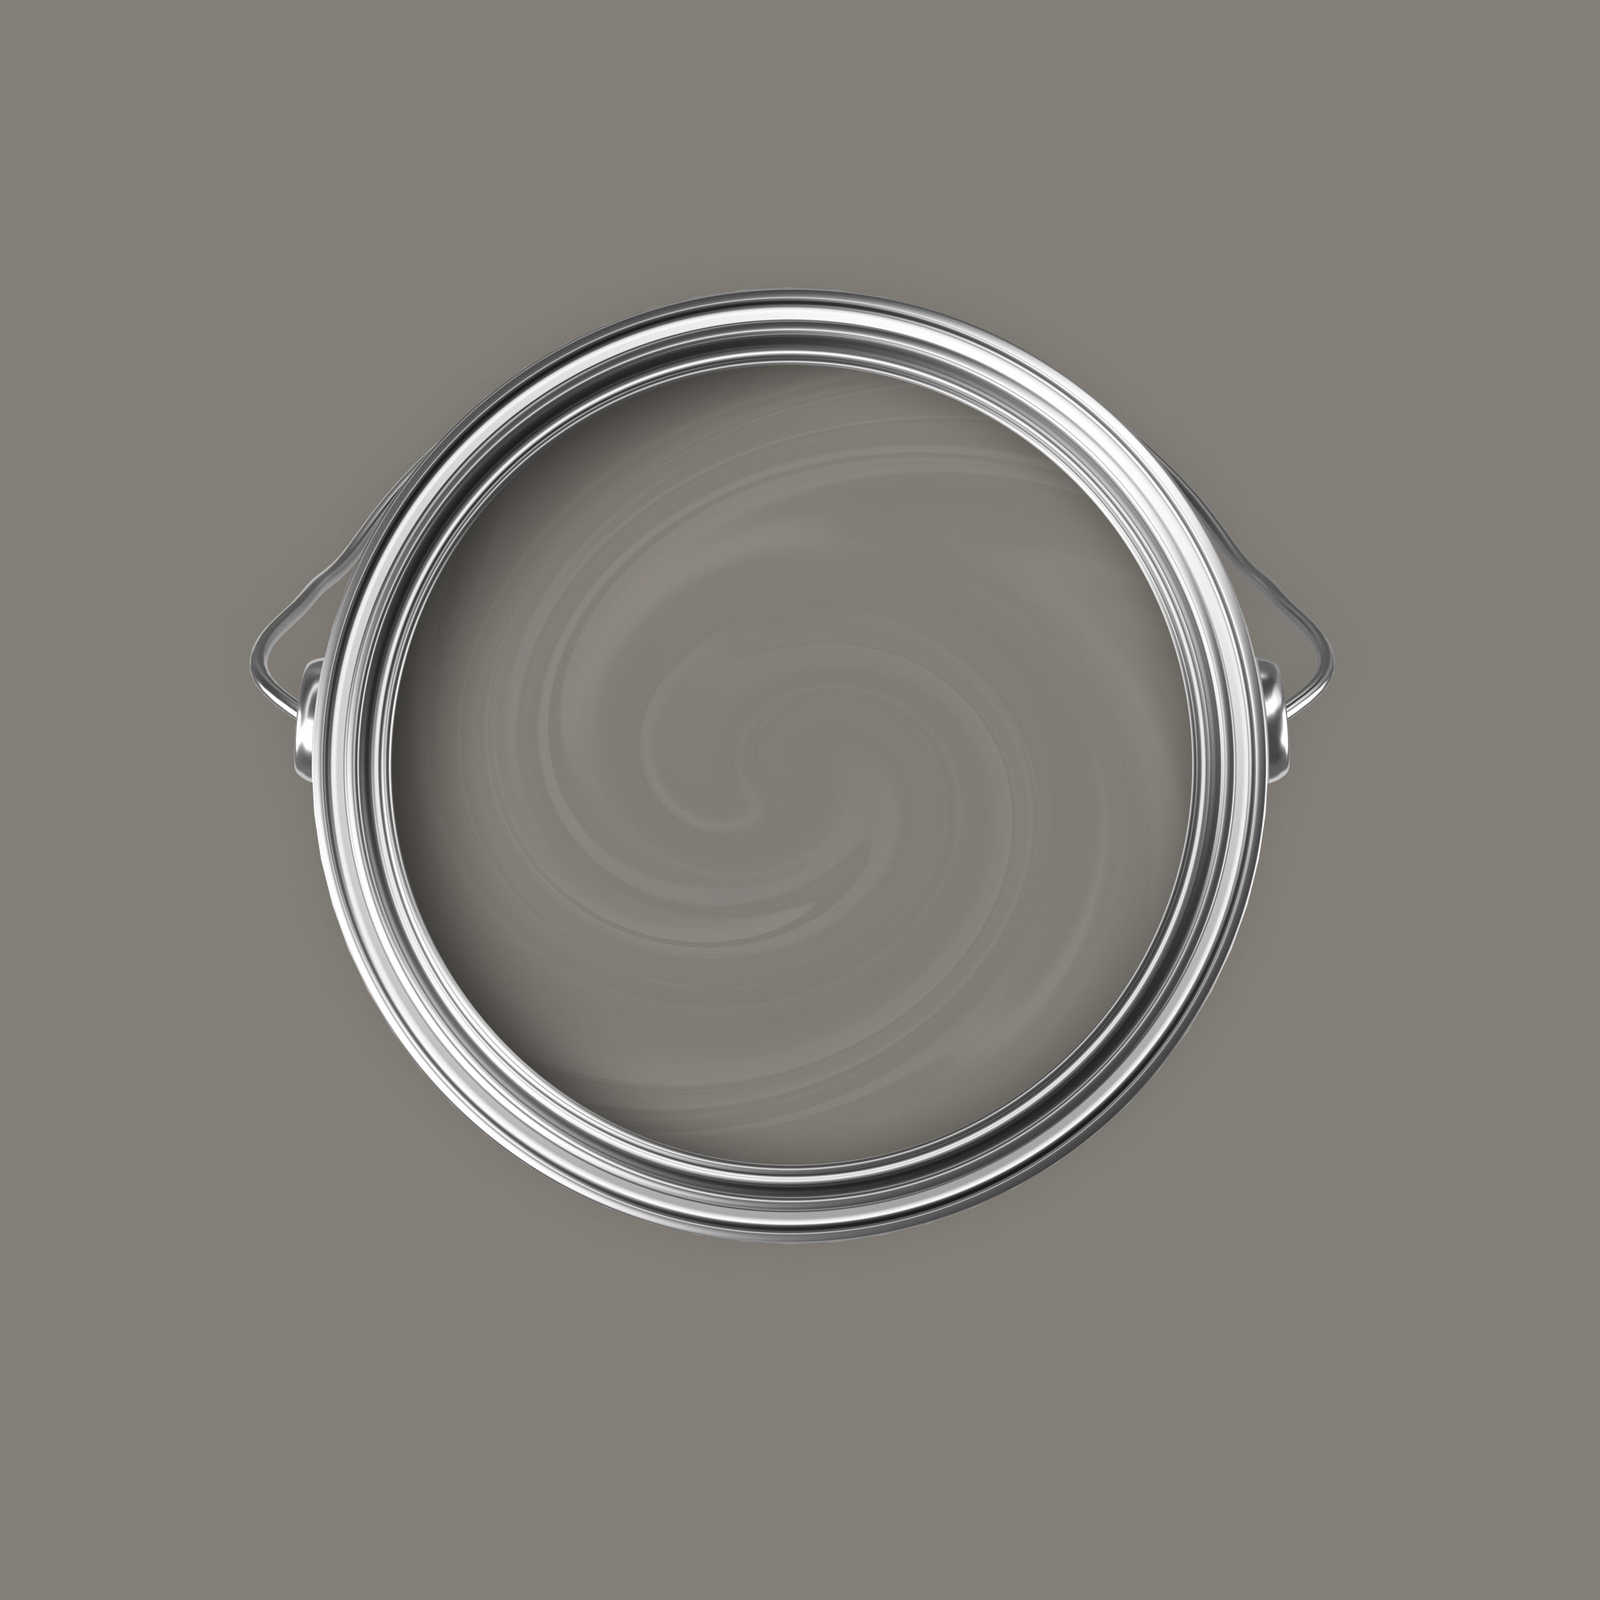             Premium Muurverf neutraal betongrijs »Creamy Grey« NW112 – 5 liter
        